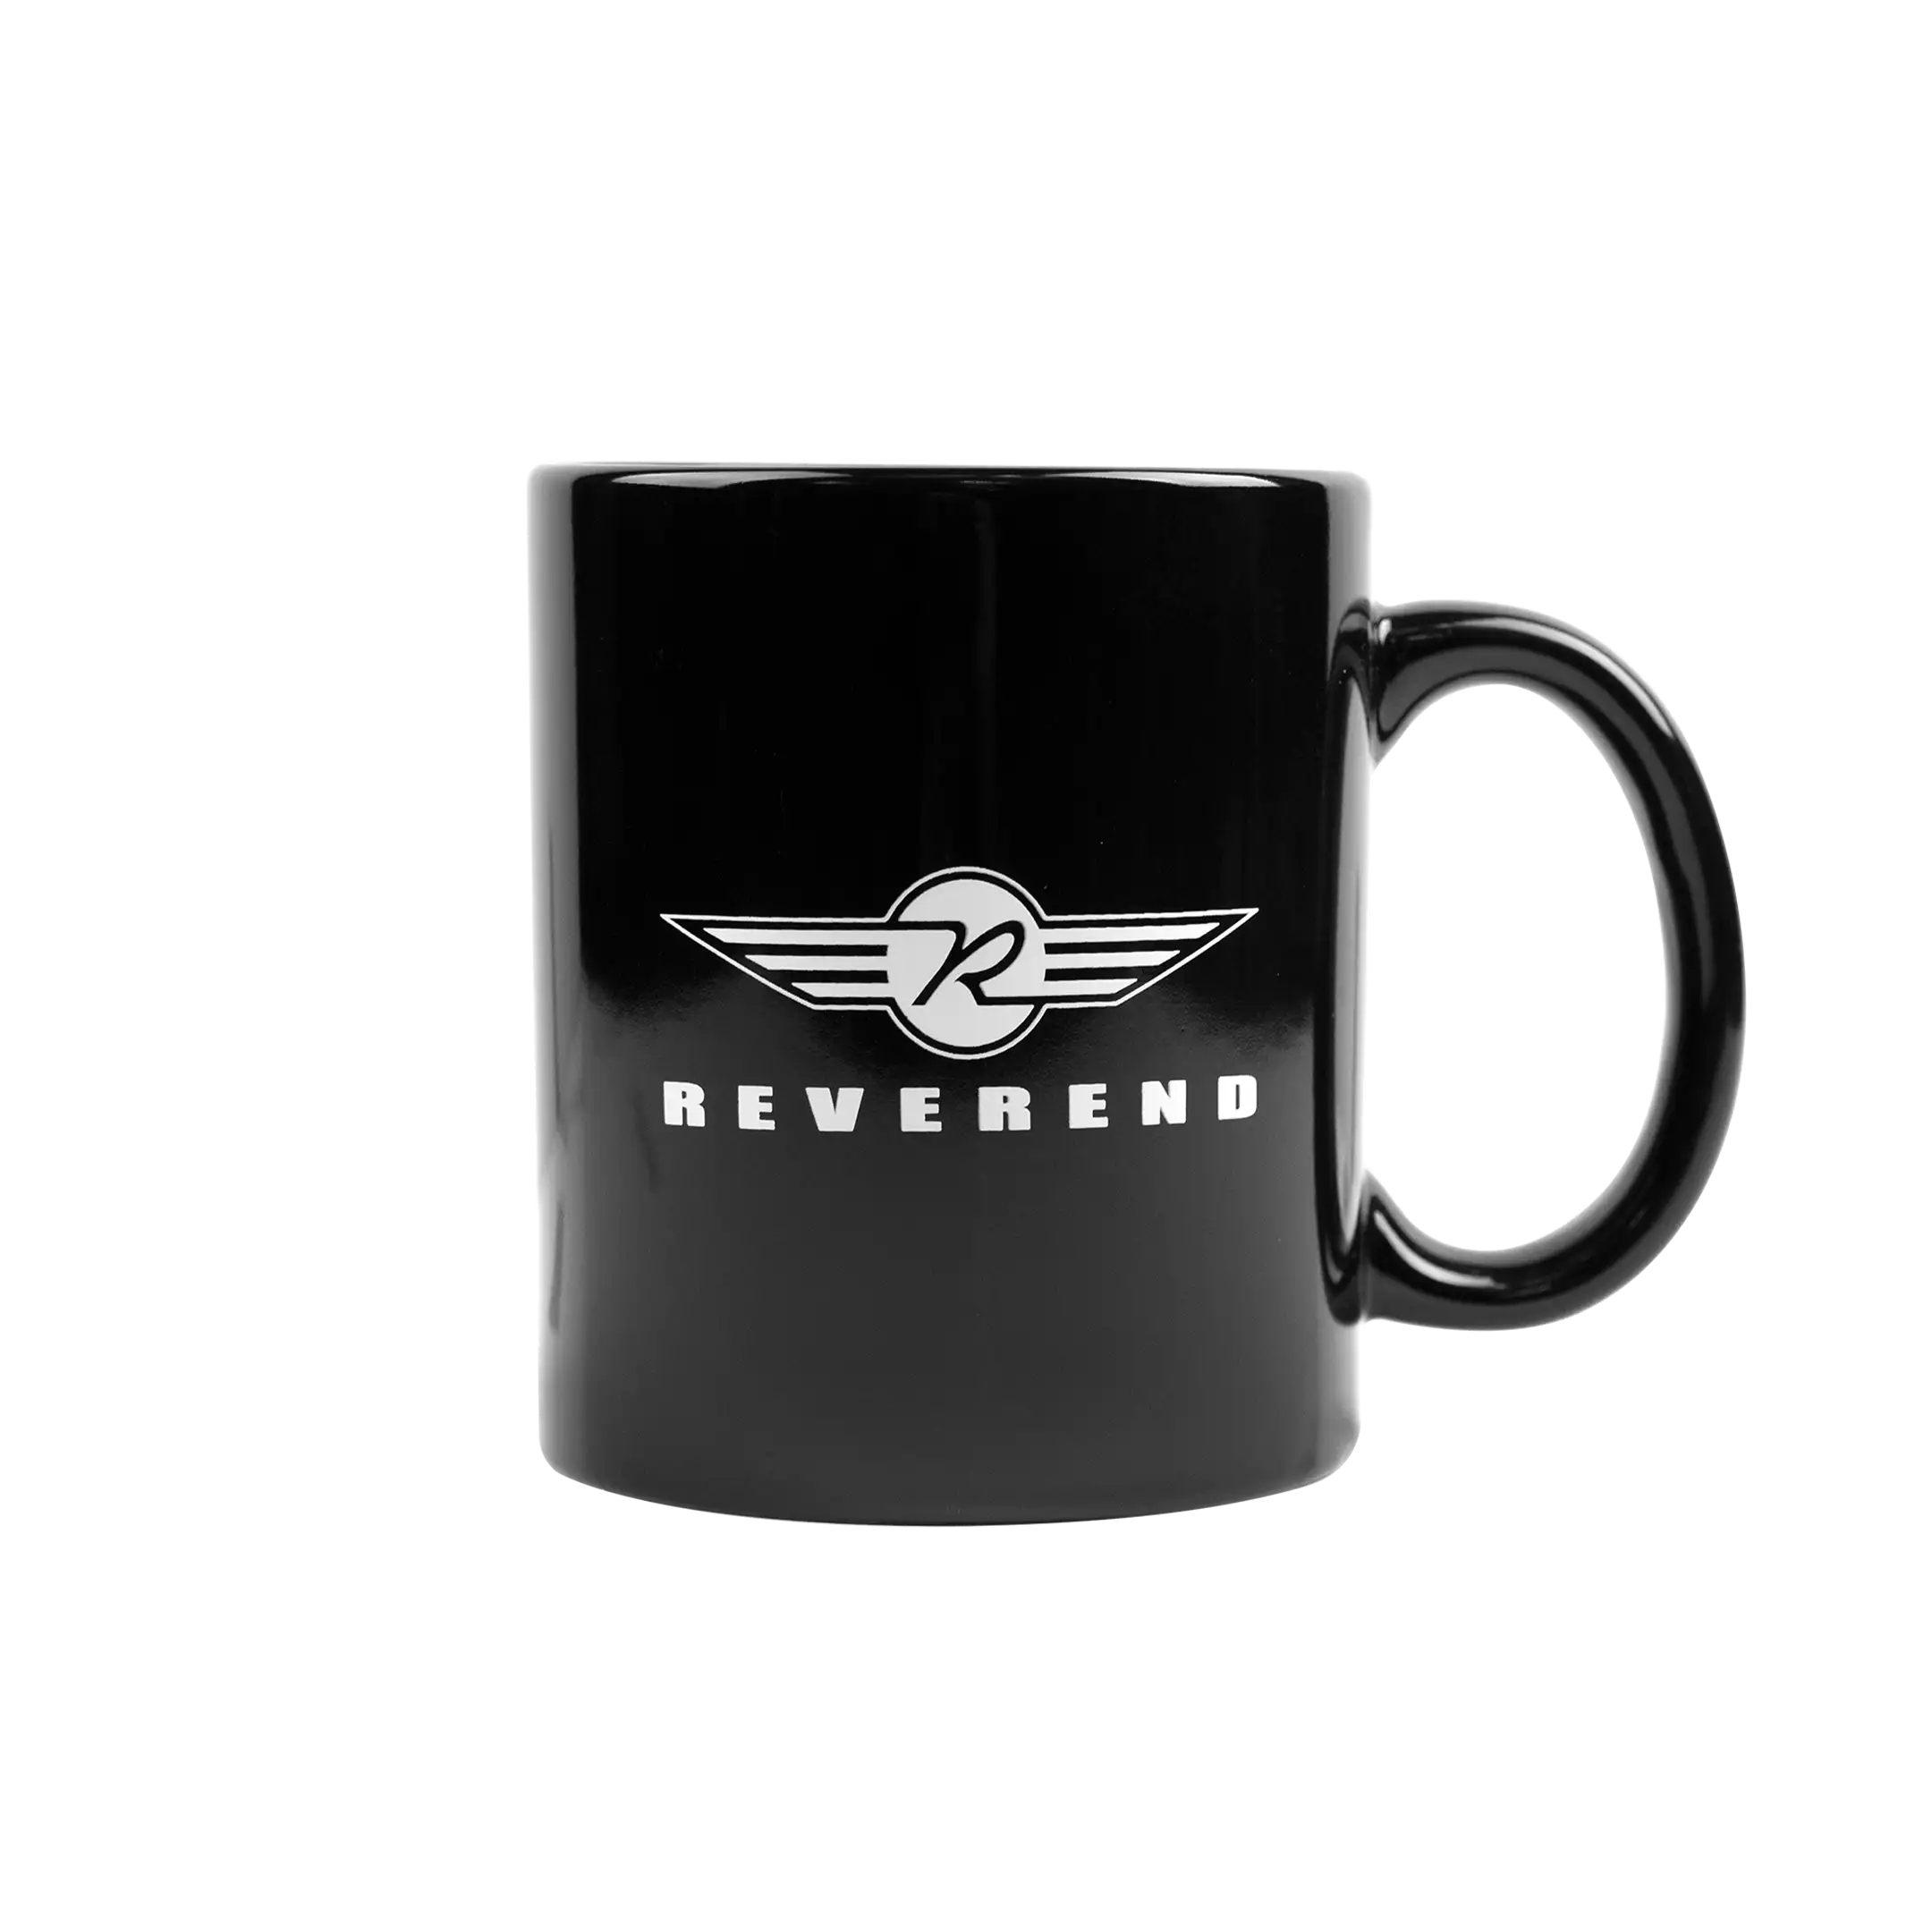 Reverend Coffee Mug